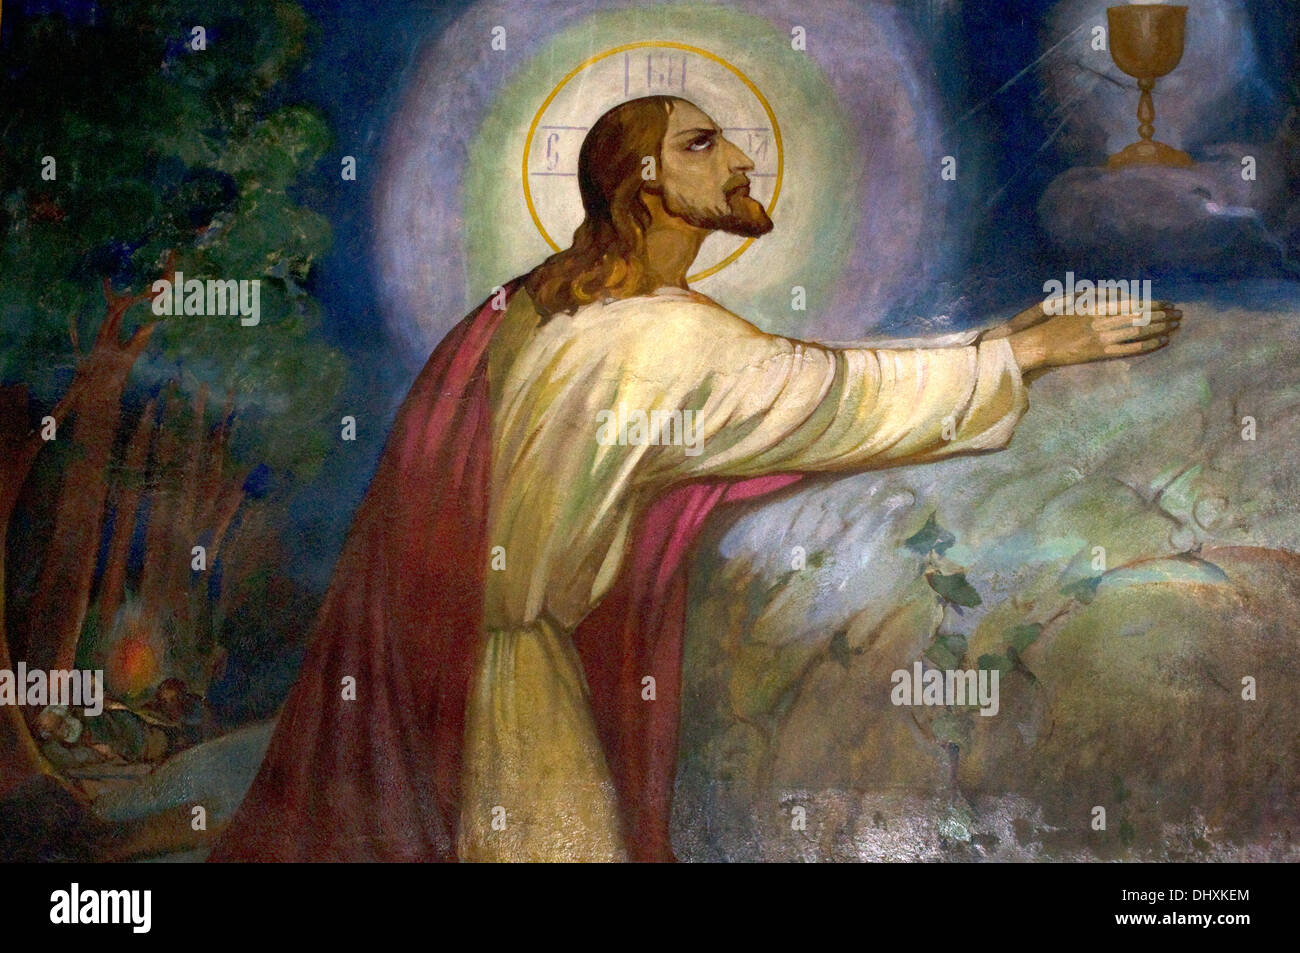 Mural Of Jesus Praying In The Garden Of Gethsemane Before The